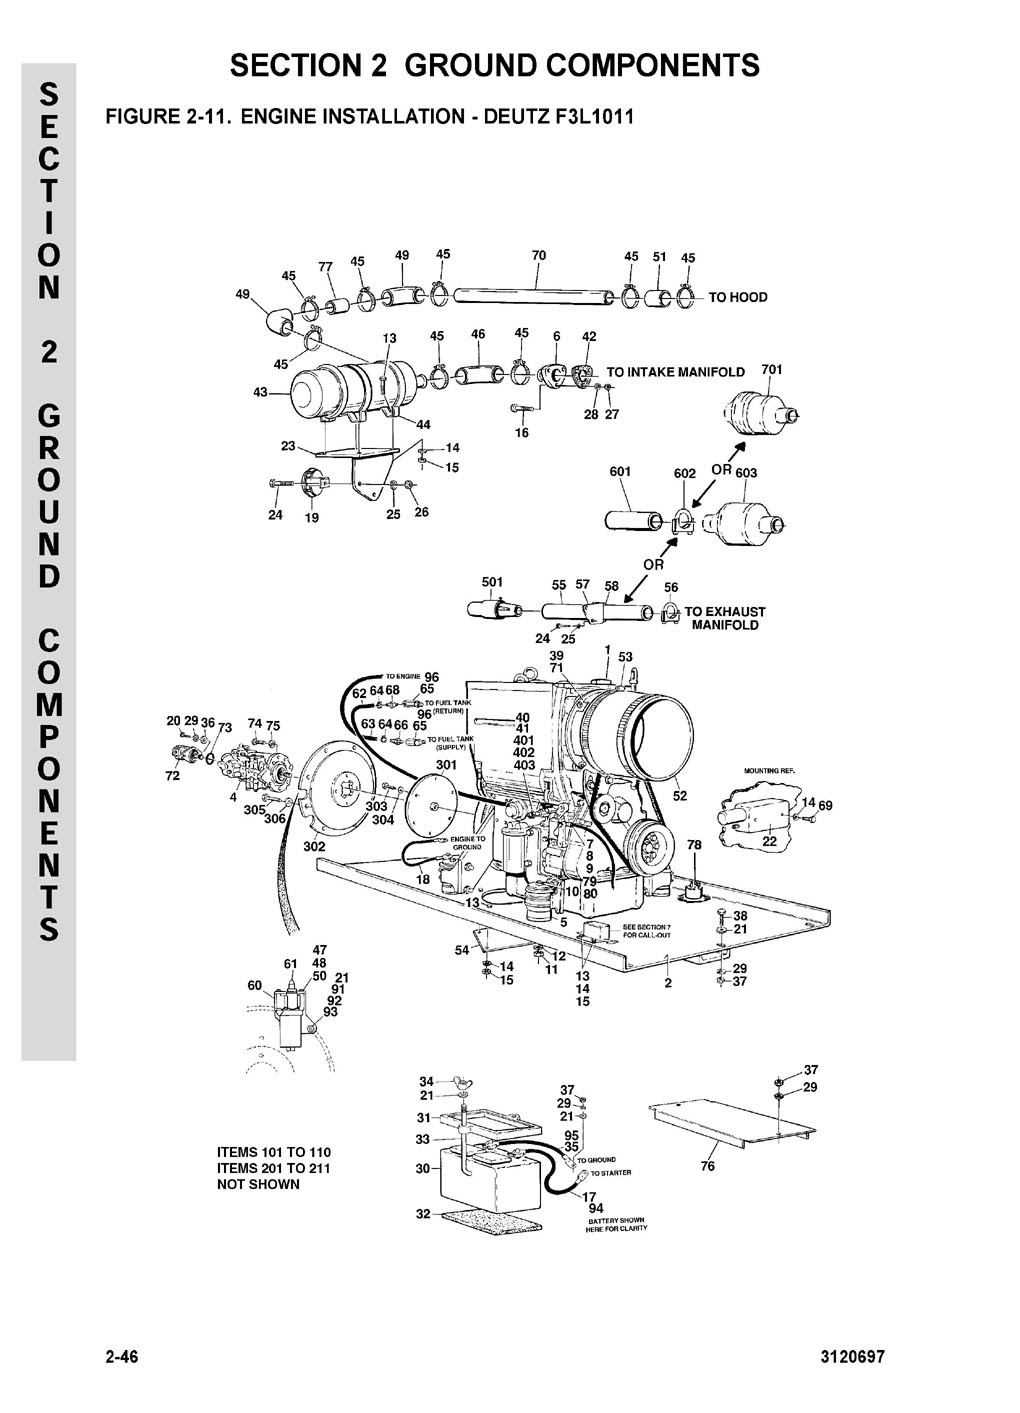 Deutz 1011 Engine Part Diagram - Wiring Diagram